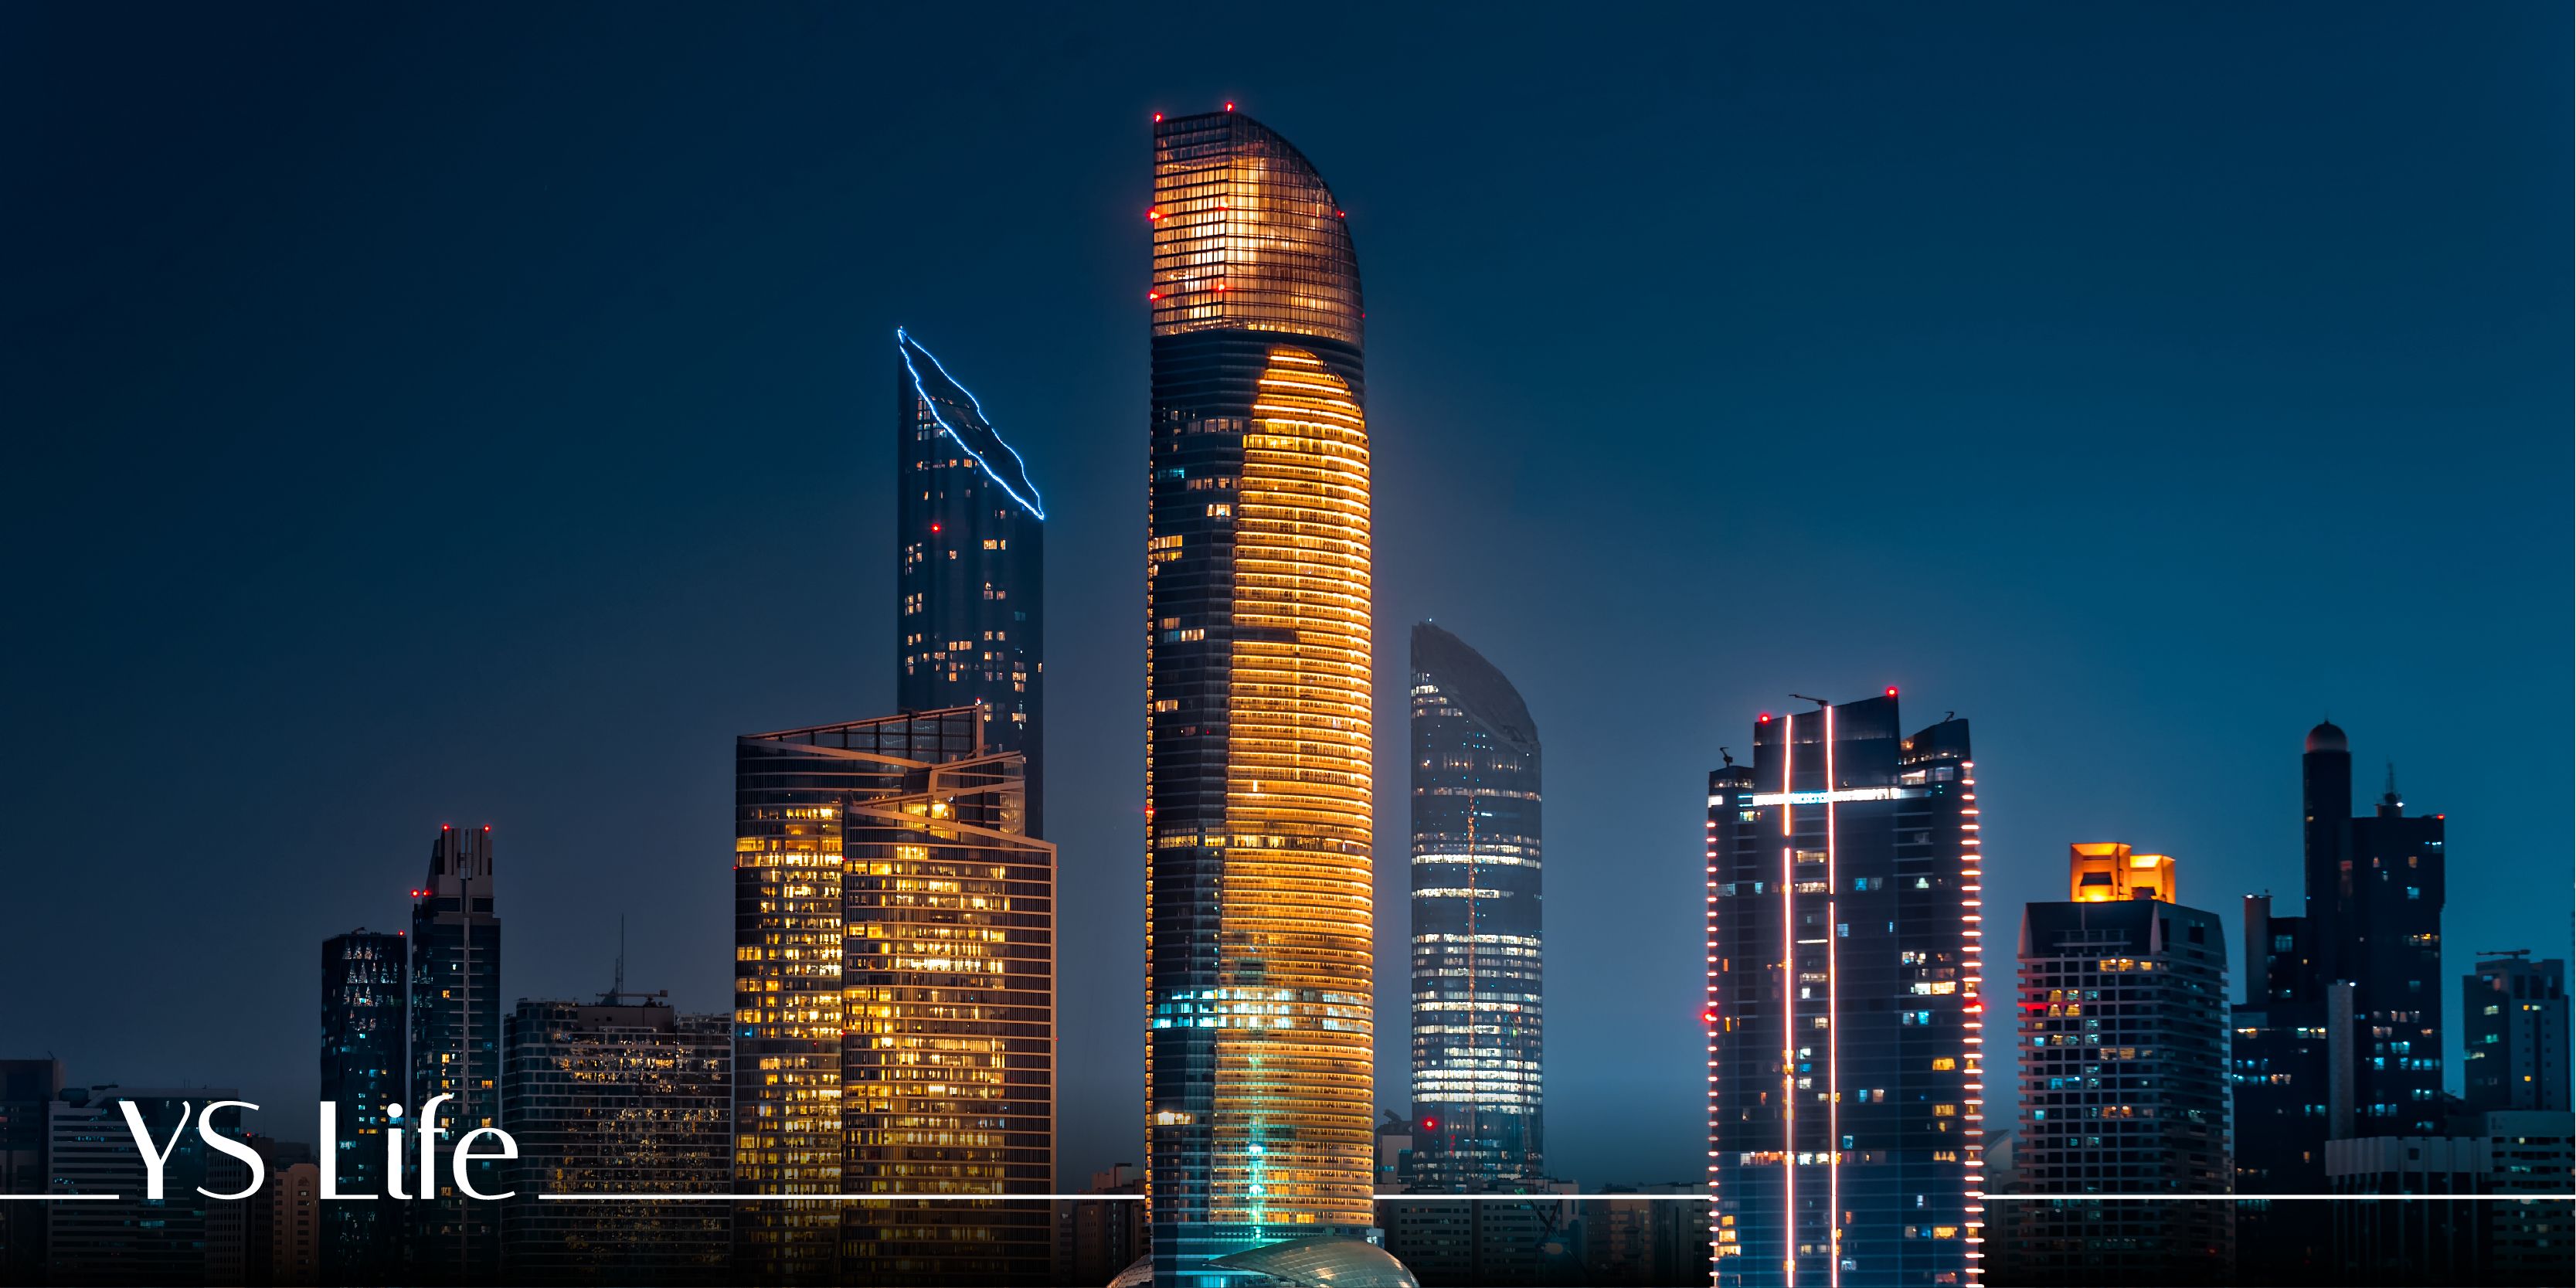 Abu Dhabi beyond the sky-high skyscrapers and theme parks